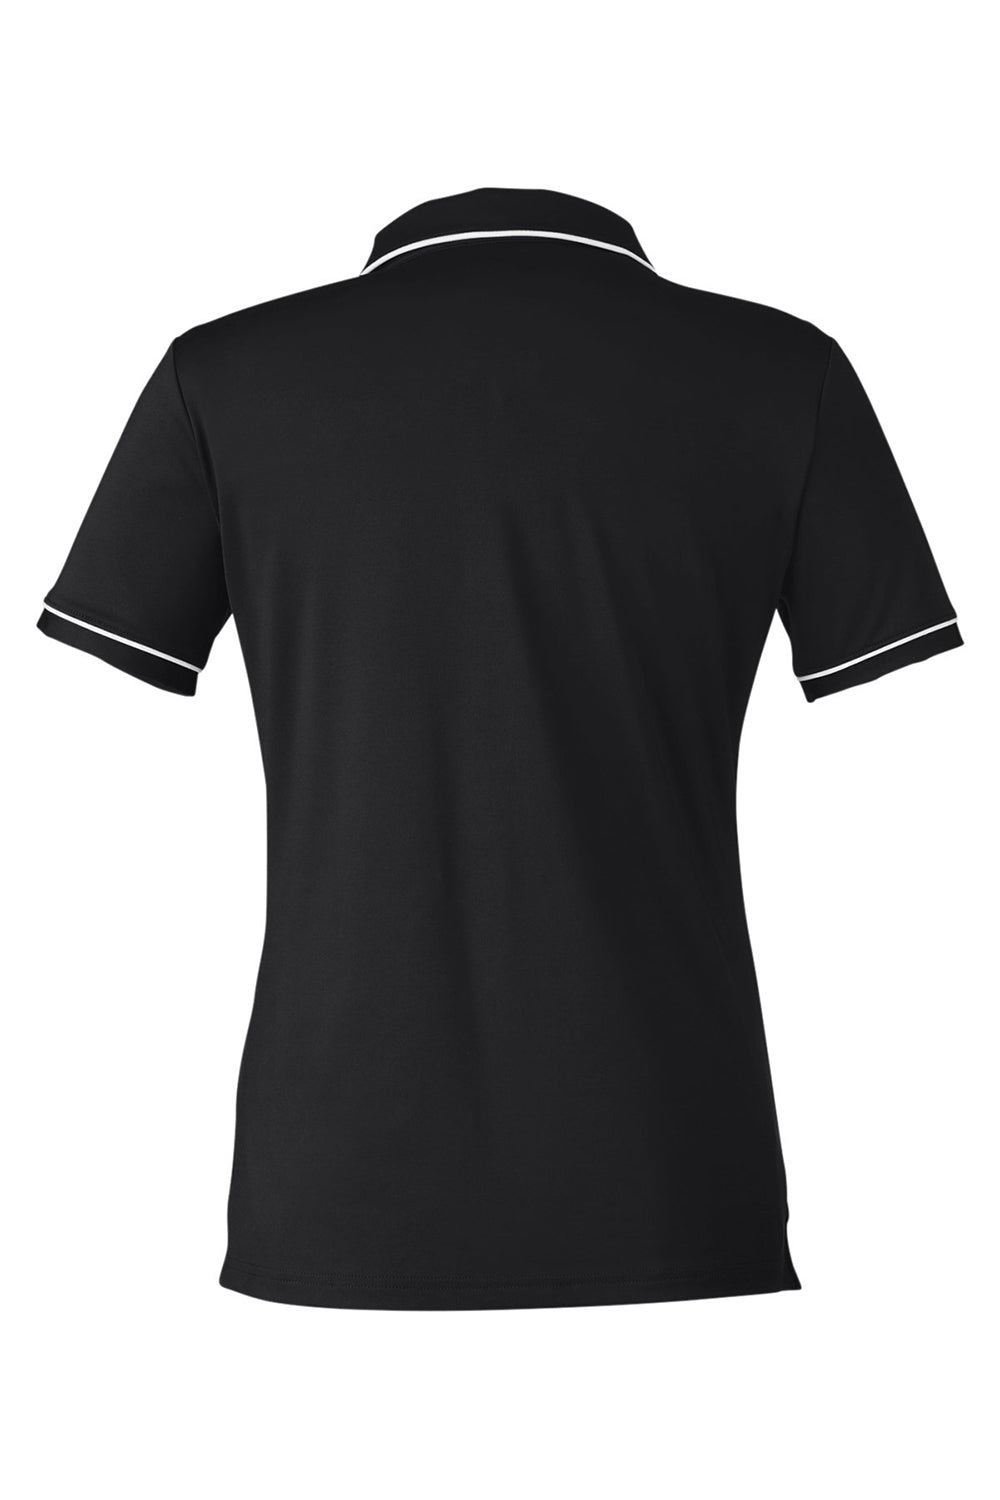 Under Armour 1376905 Womens Teams Performance Moisture Wicking Short Sleeve Polo Shirt Black Flat Back